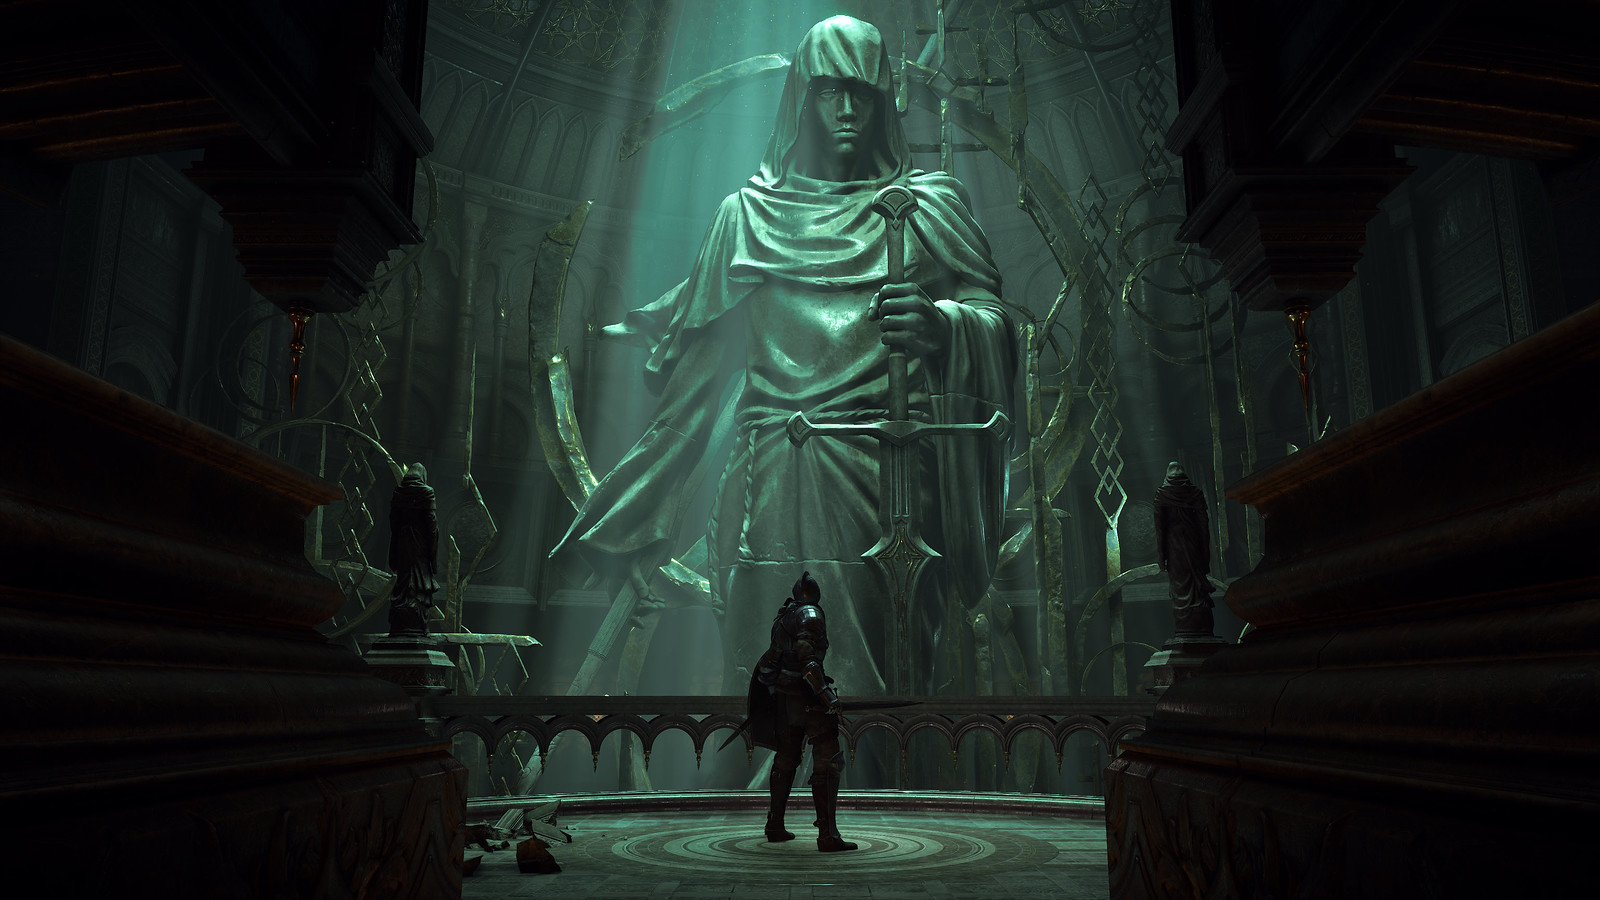 Elden Ring's graphics team felt pressured by the Demon's Souls remake